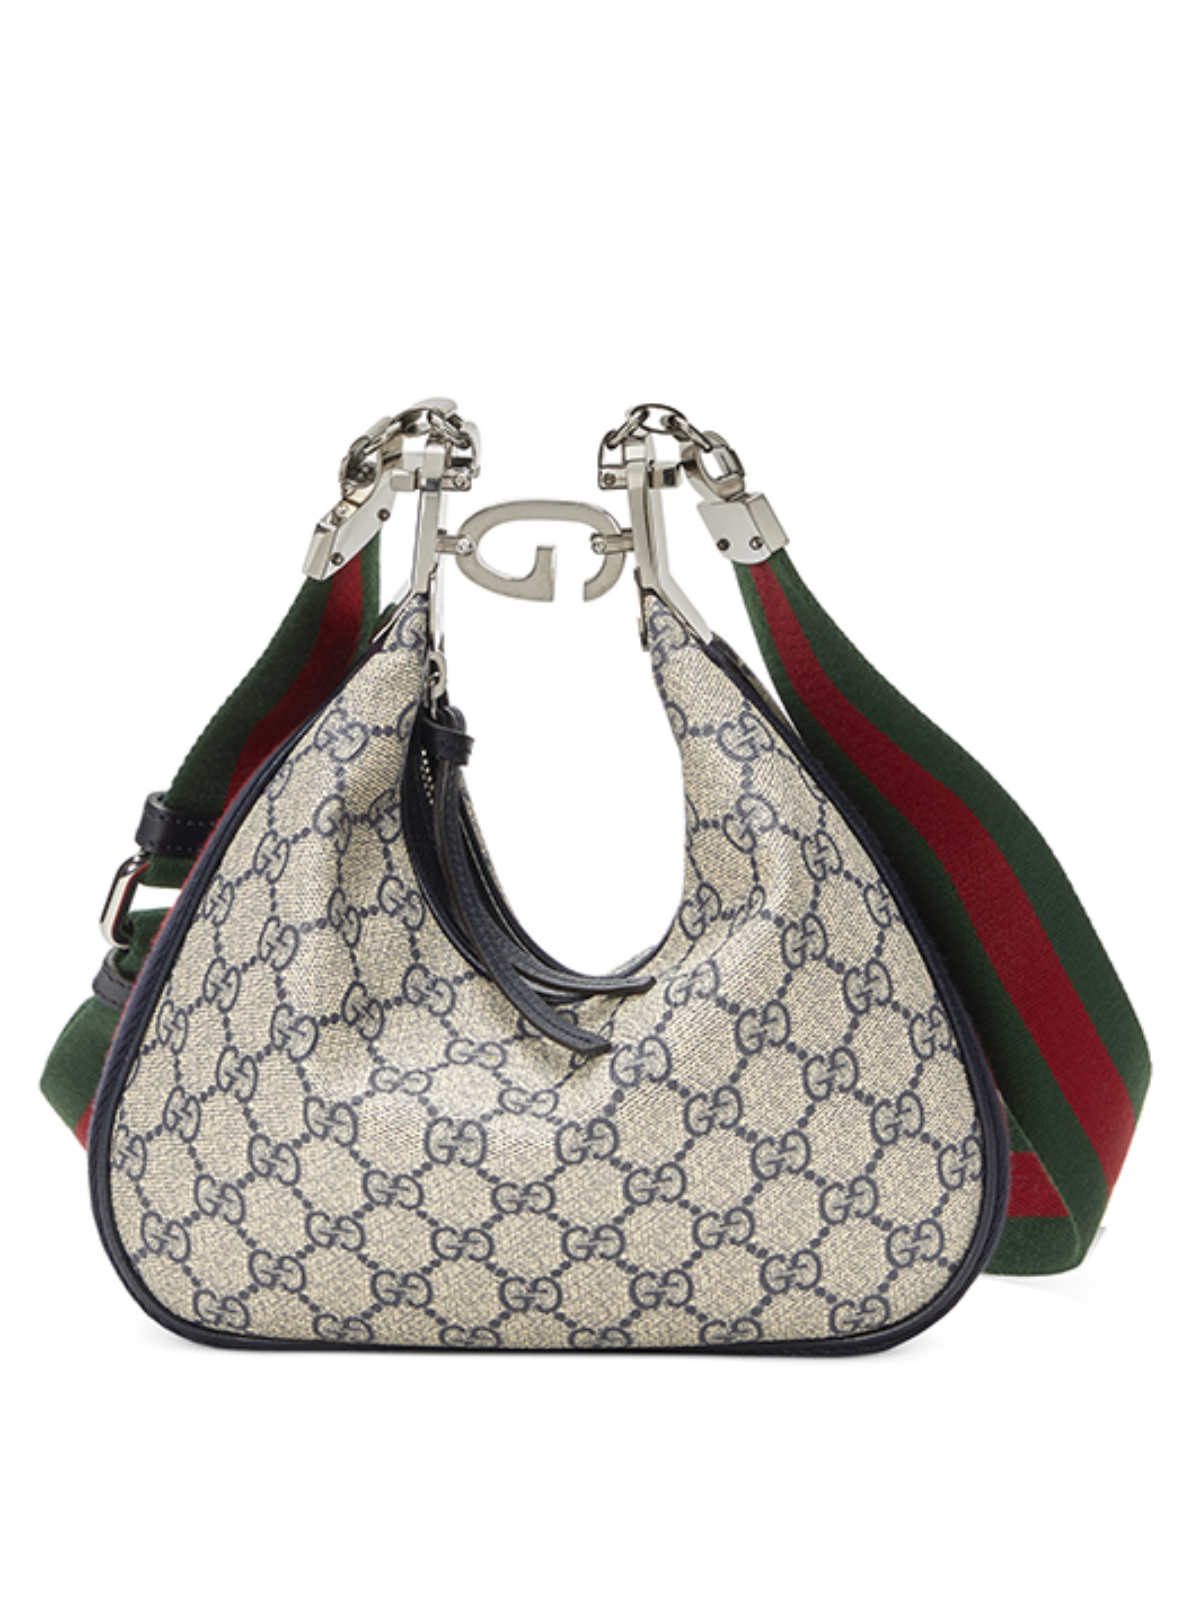 Gucci Attache Bag: An Object Of Desire